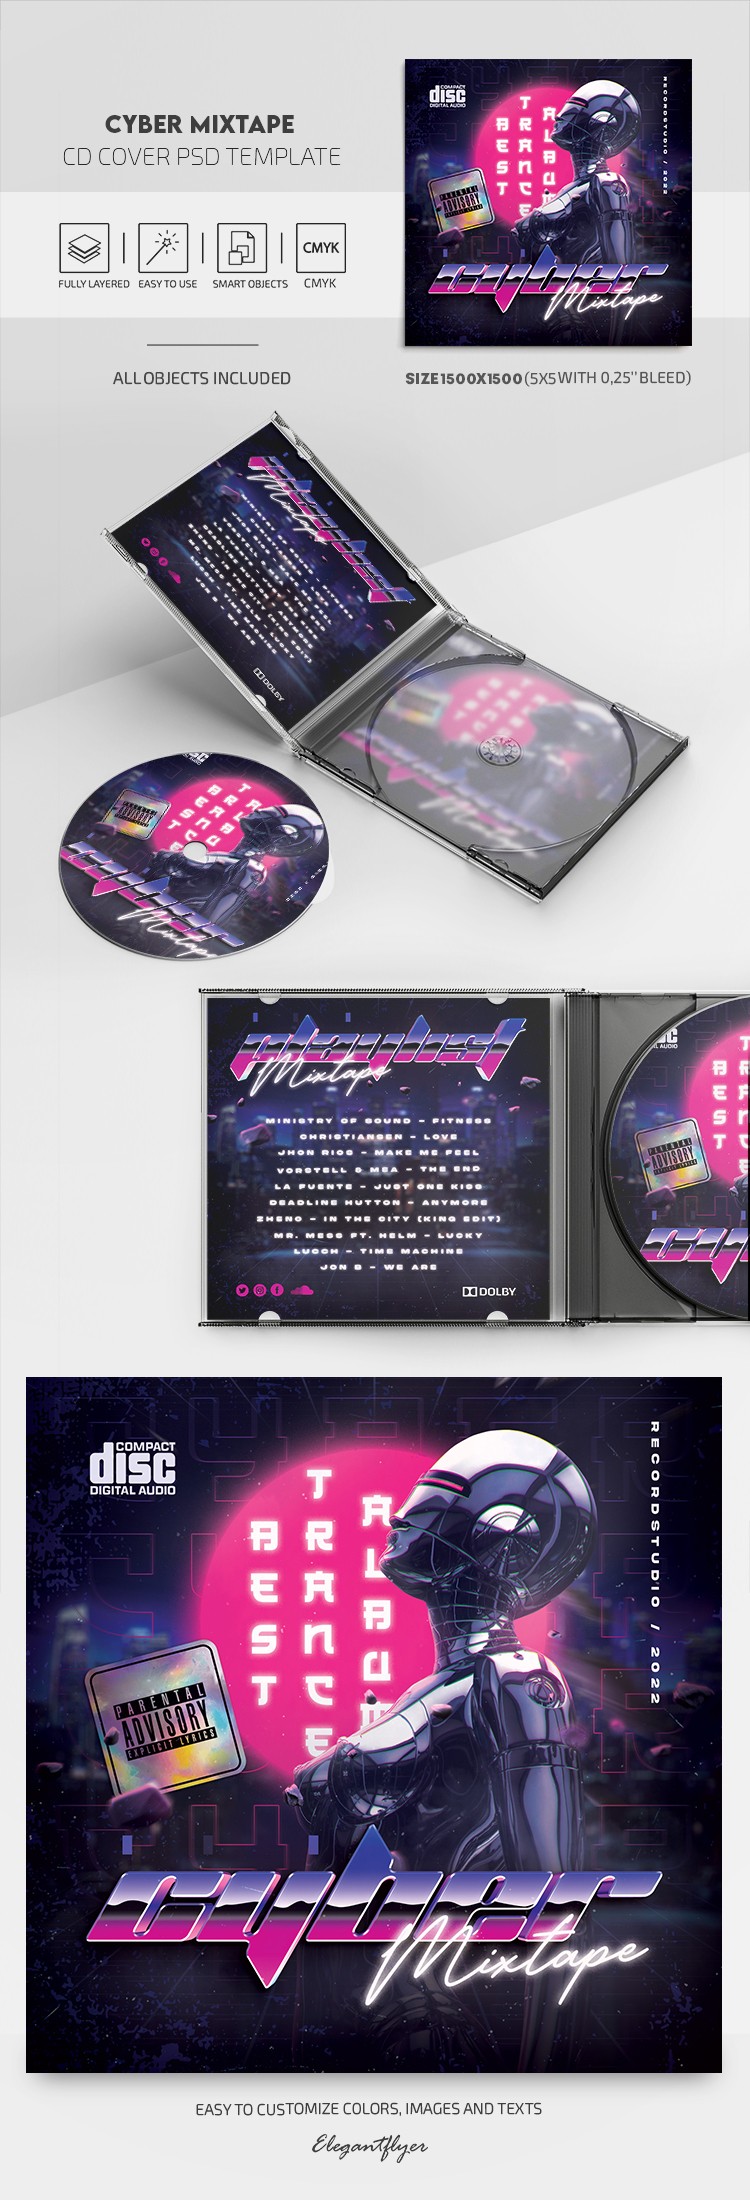 Capa do CD Cyber Mixtape by ElegantFlyer